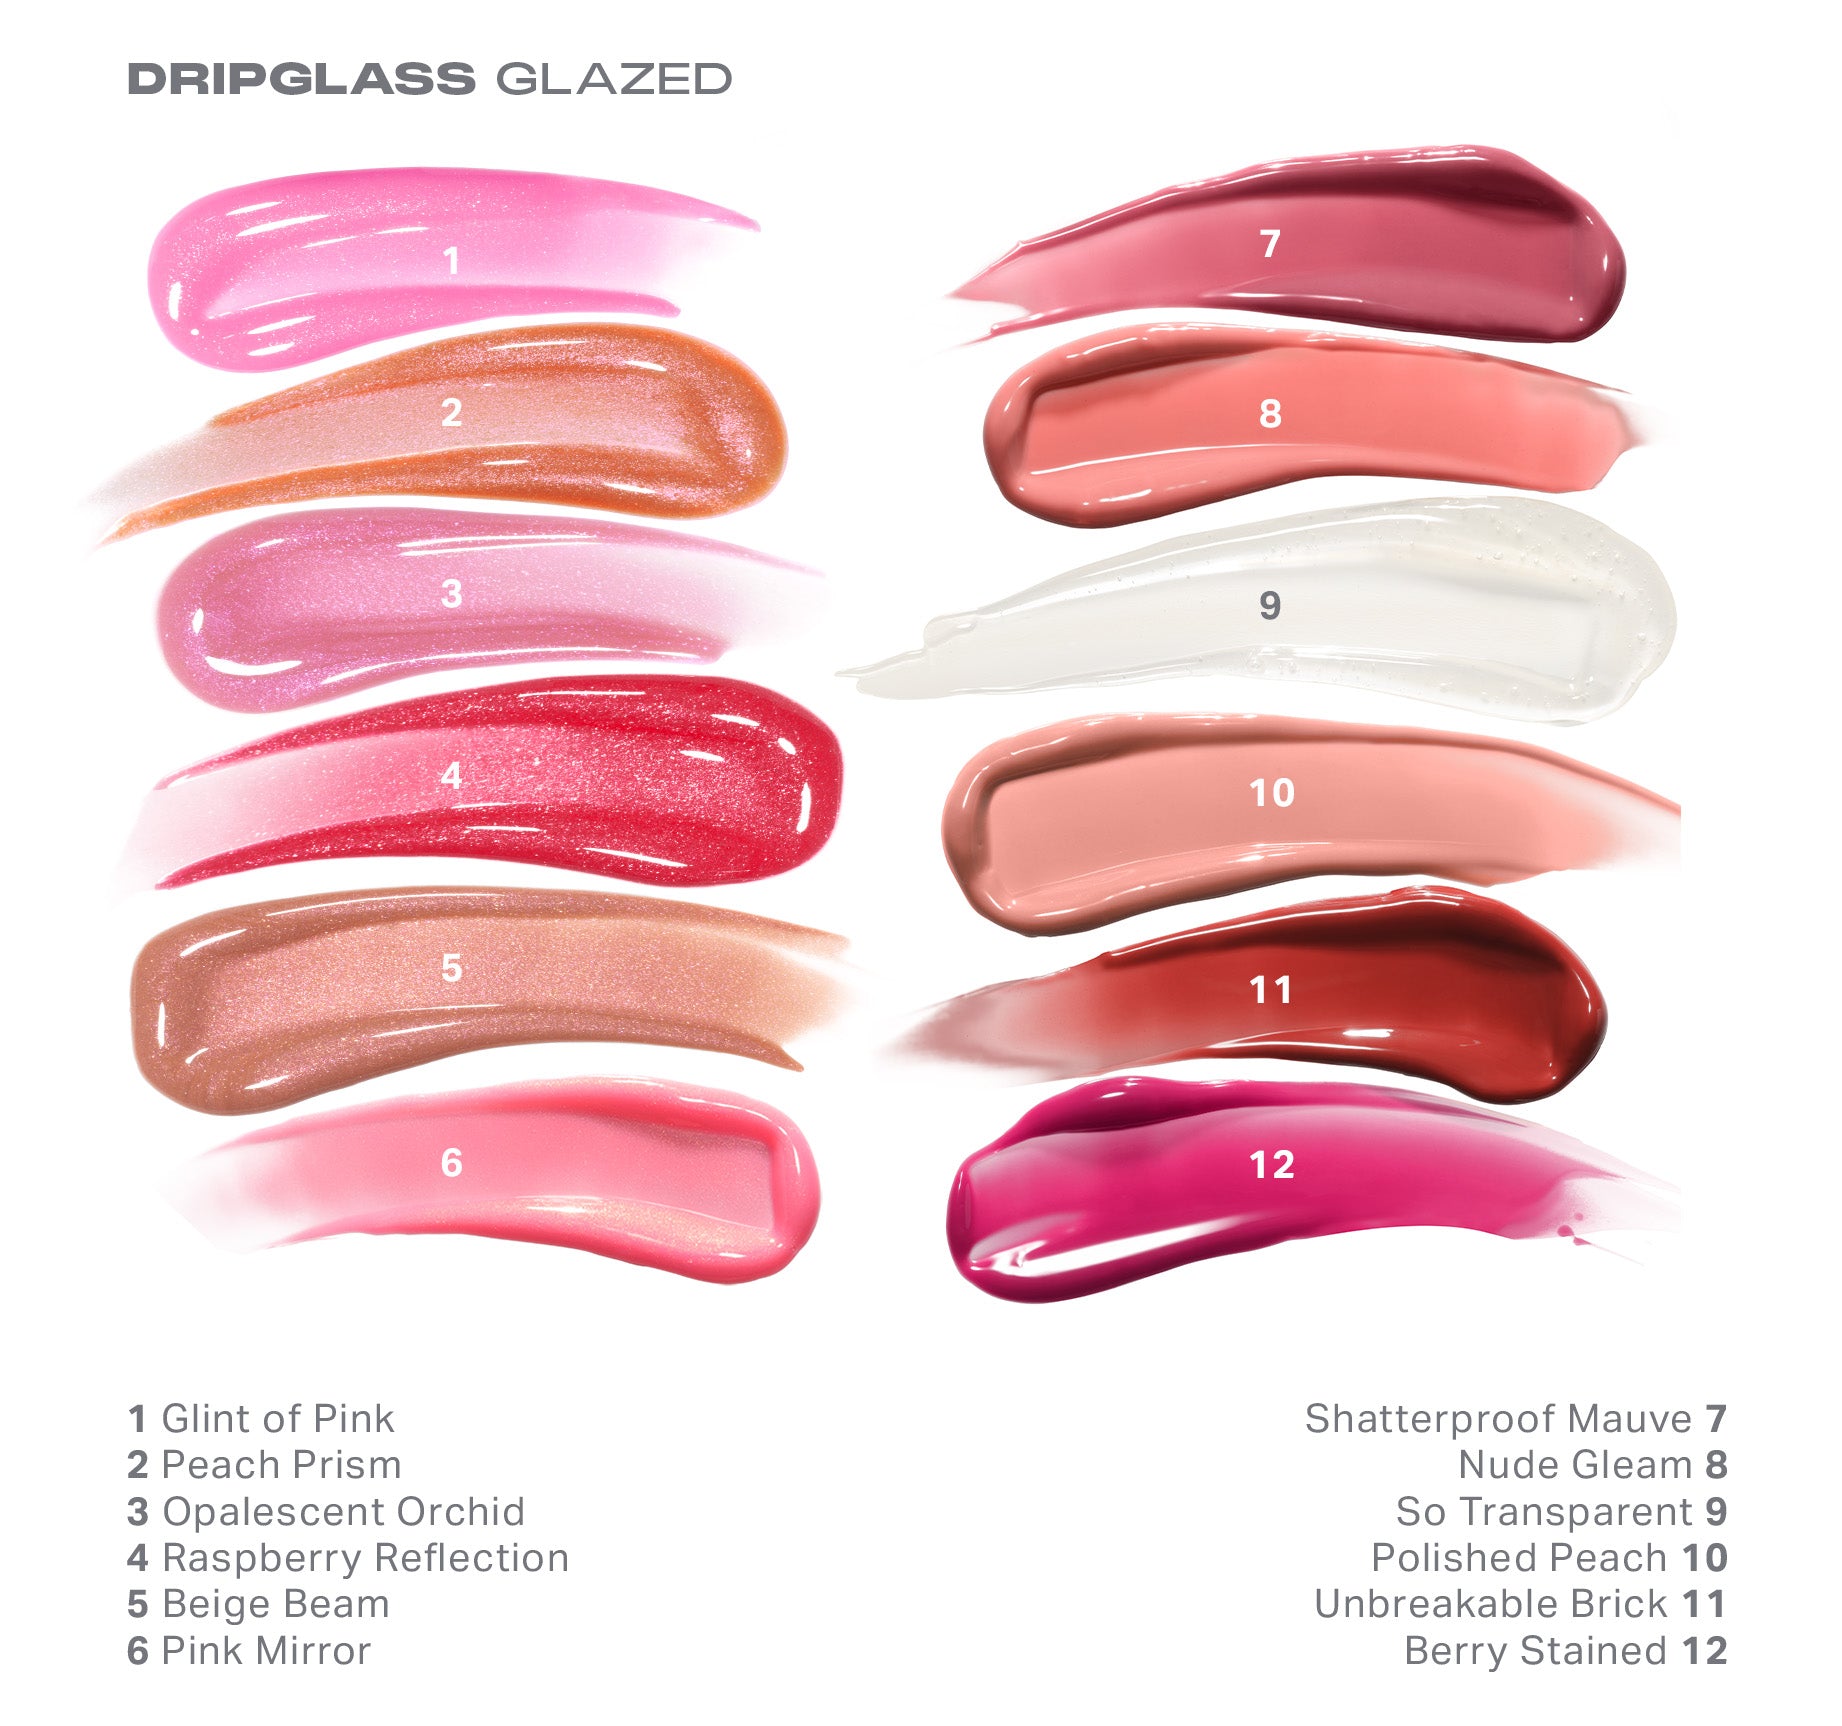 Dripglass Glazed High Shine Lip Gloss - Pink Mirror - Image 4